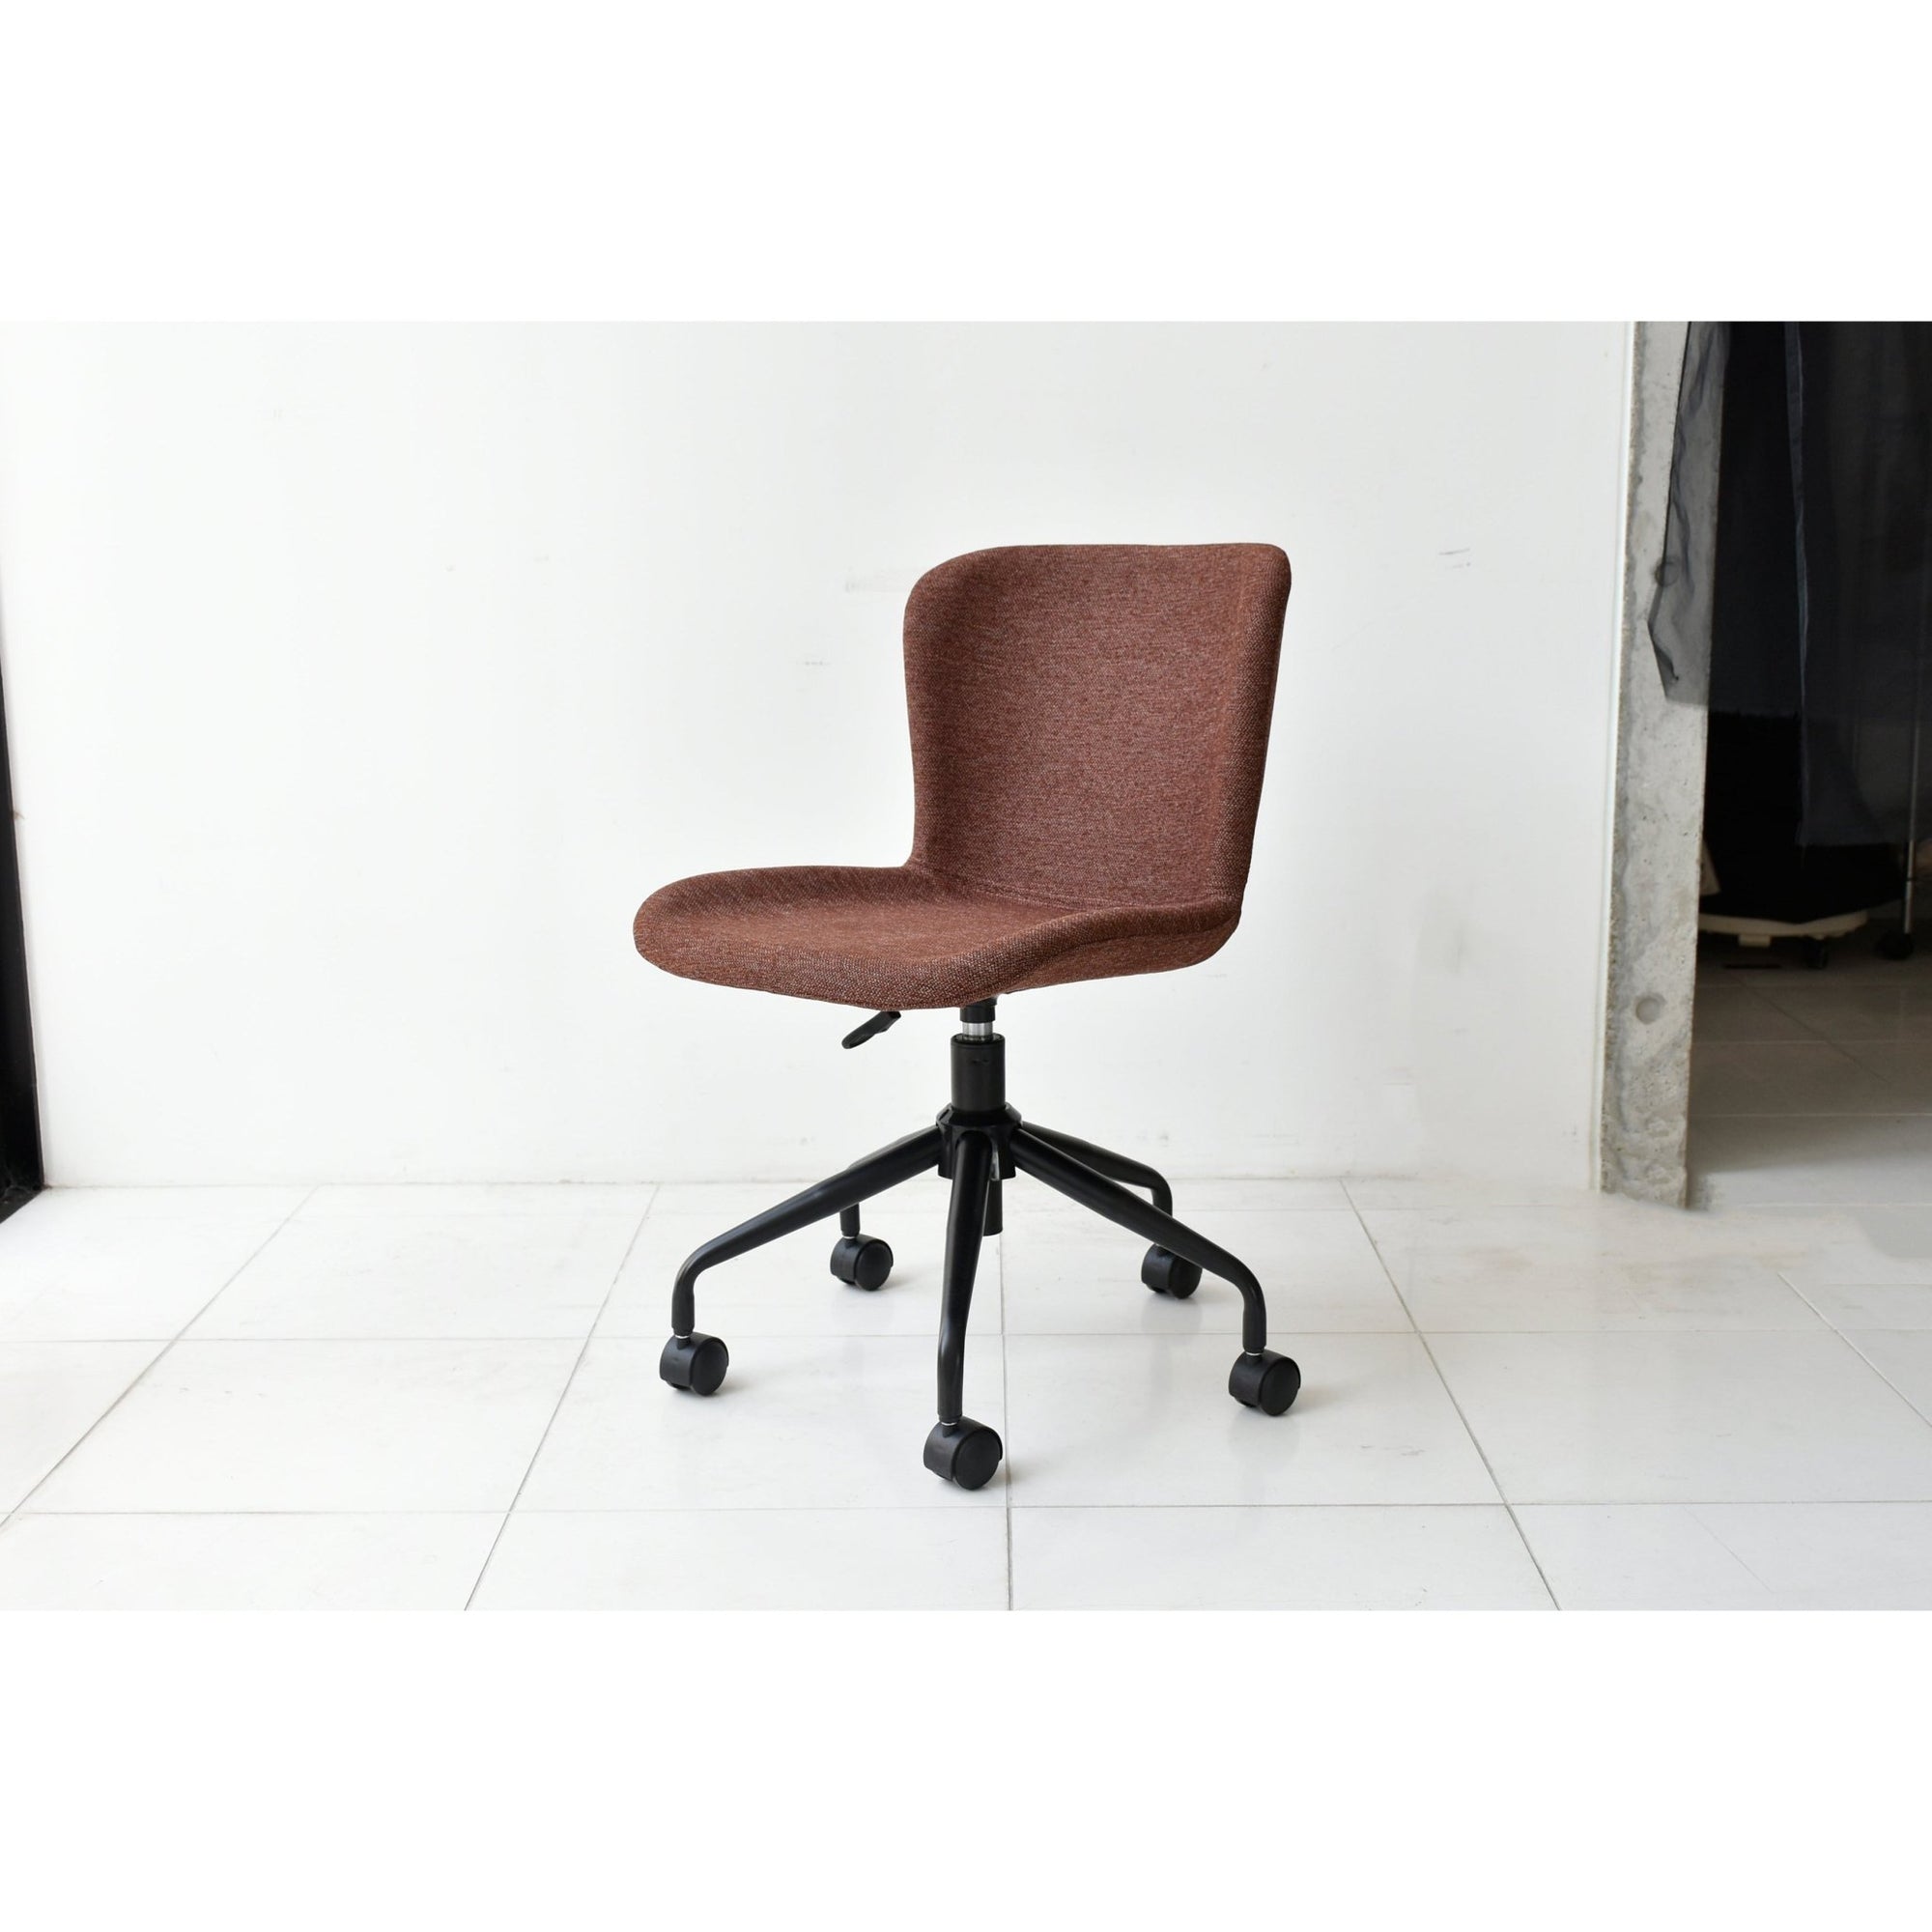 Office Chair PANEM - デスクチェア - 4937294131003 - 3